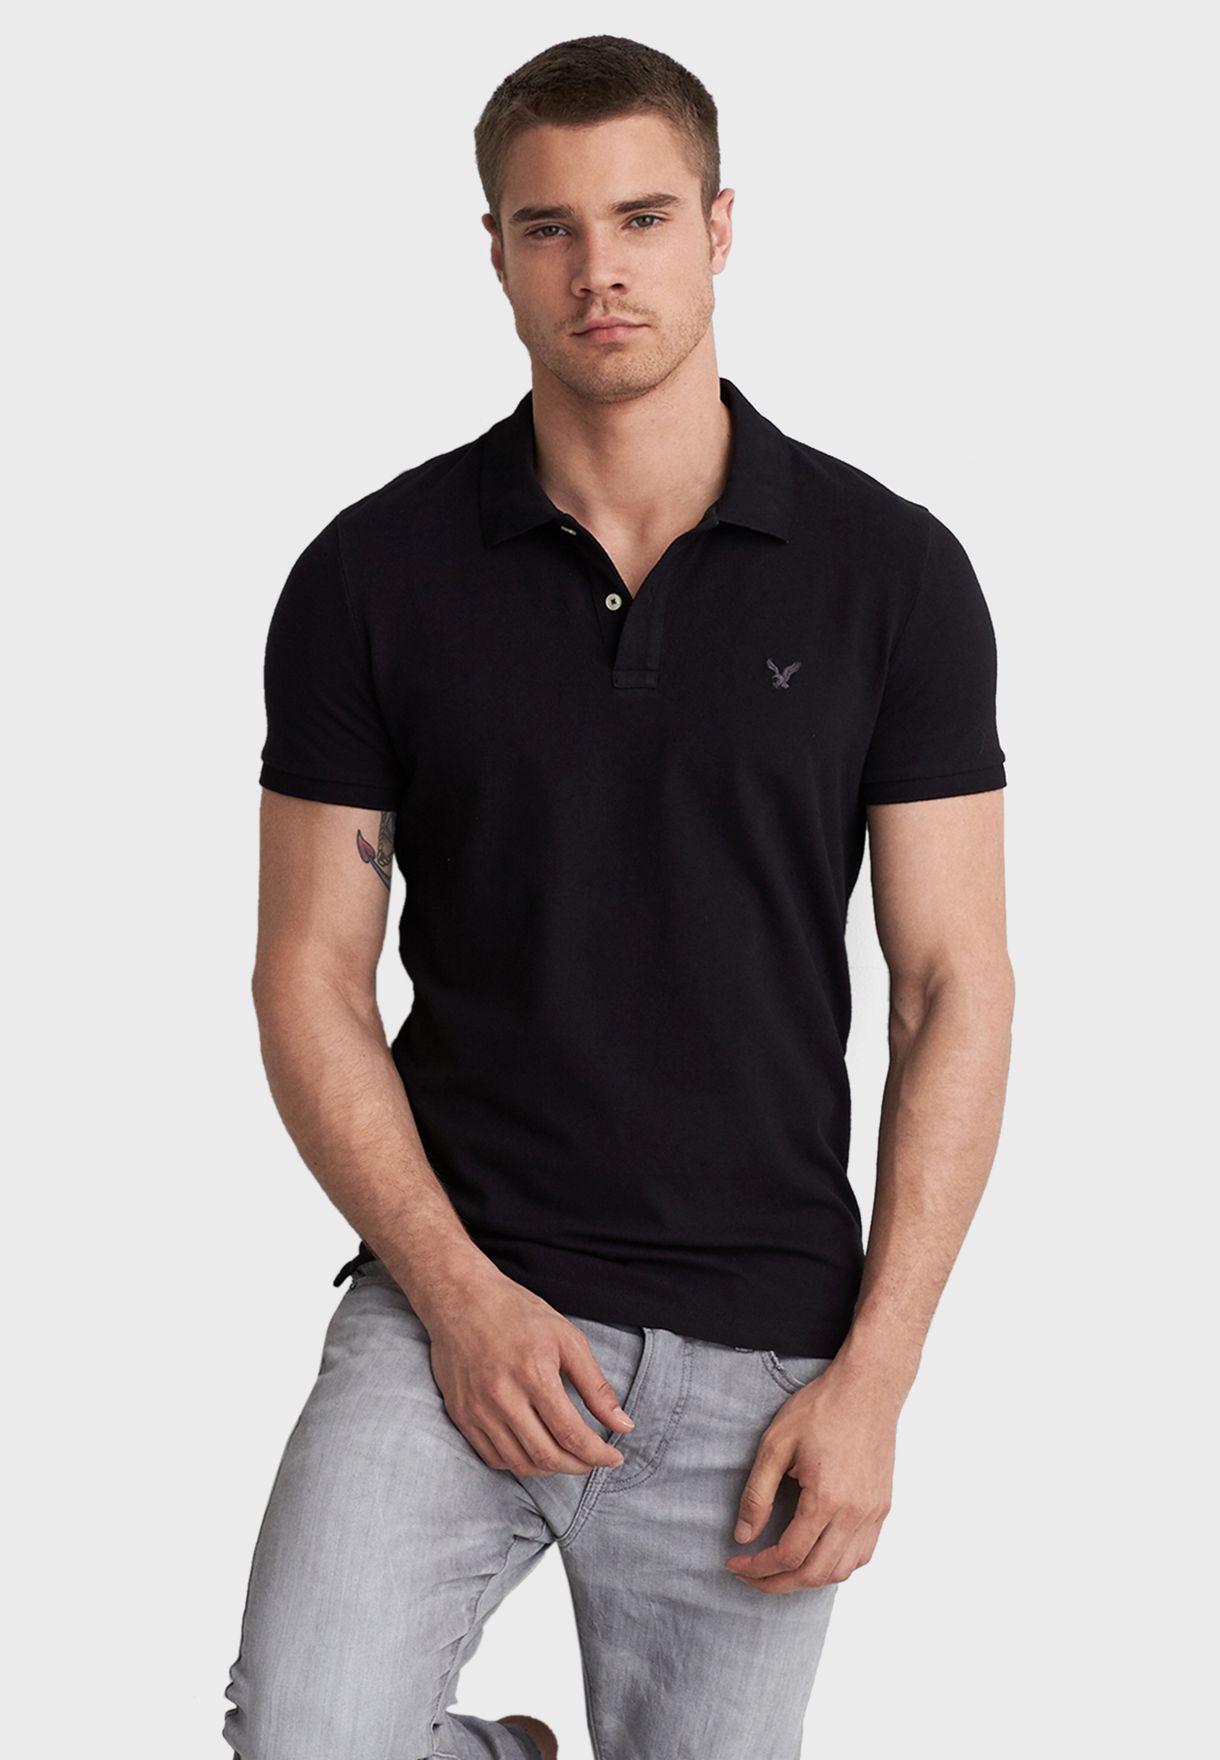 american eagle black polo shirts for men